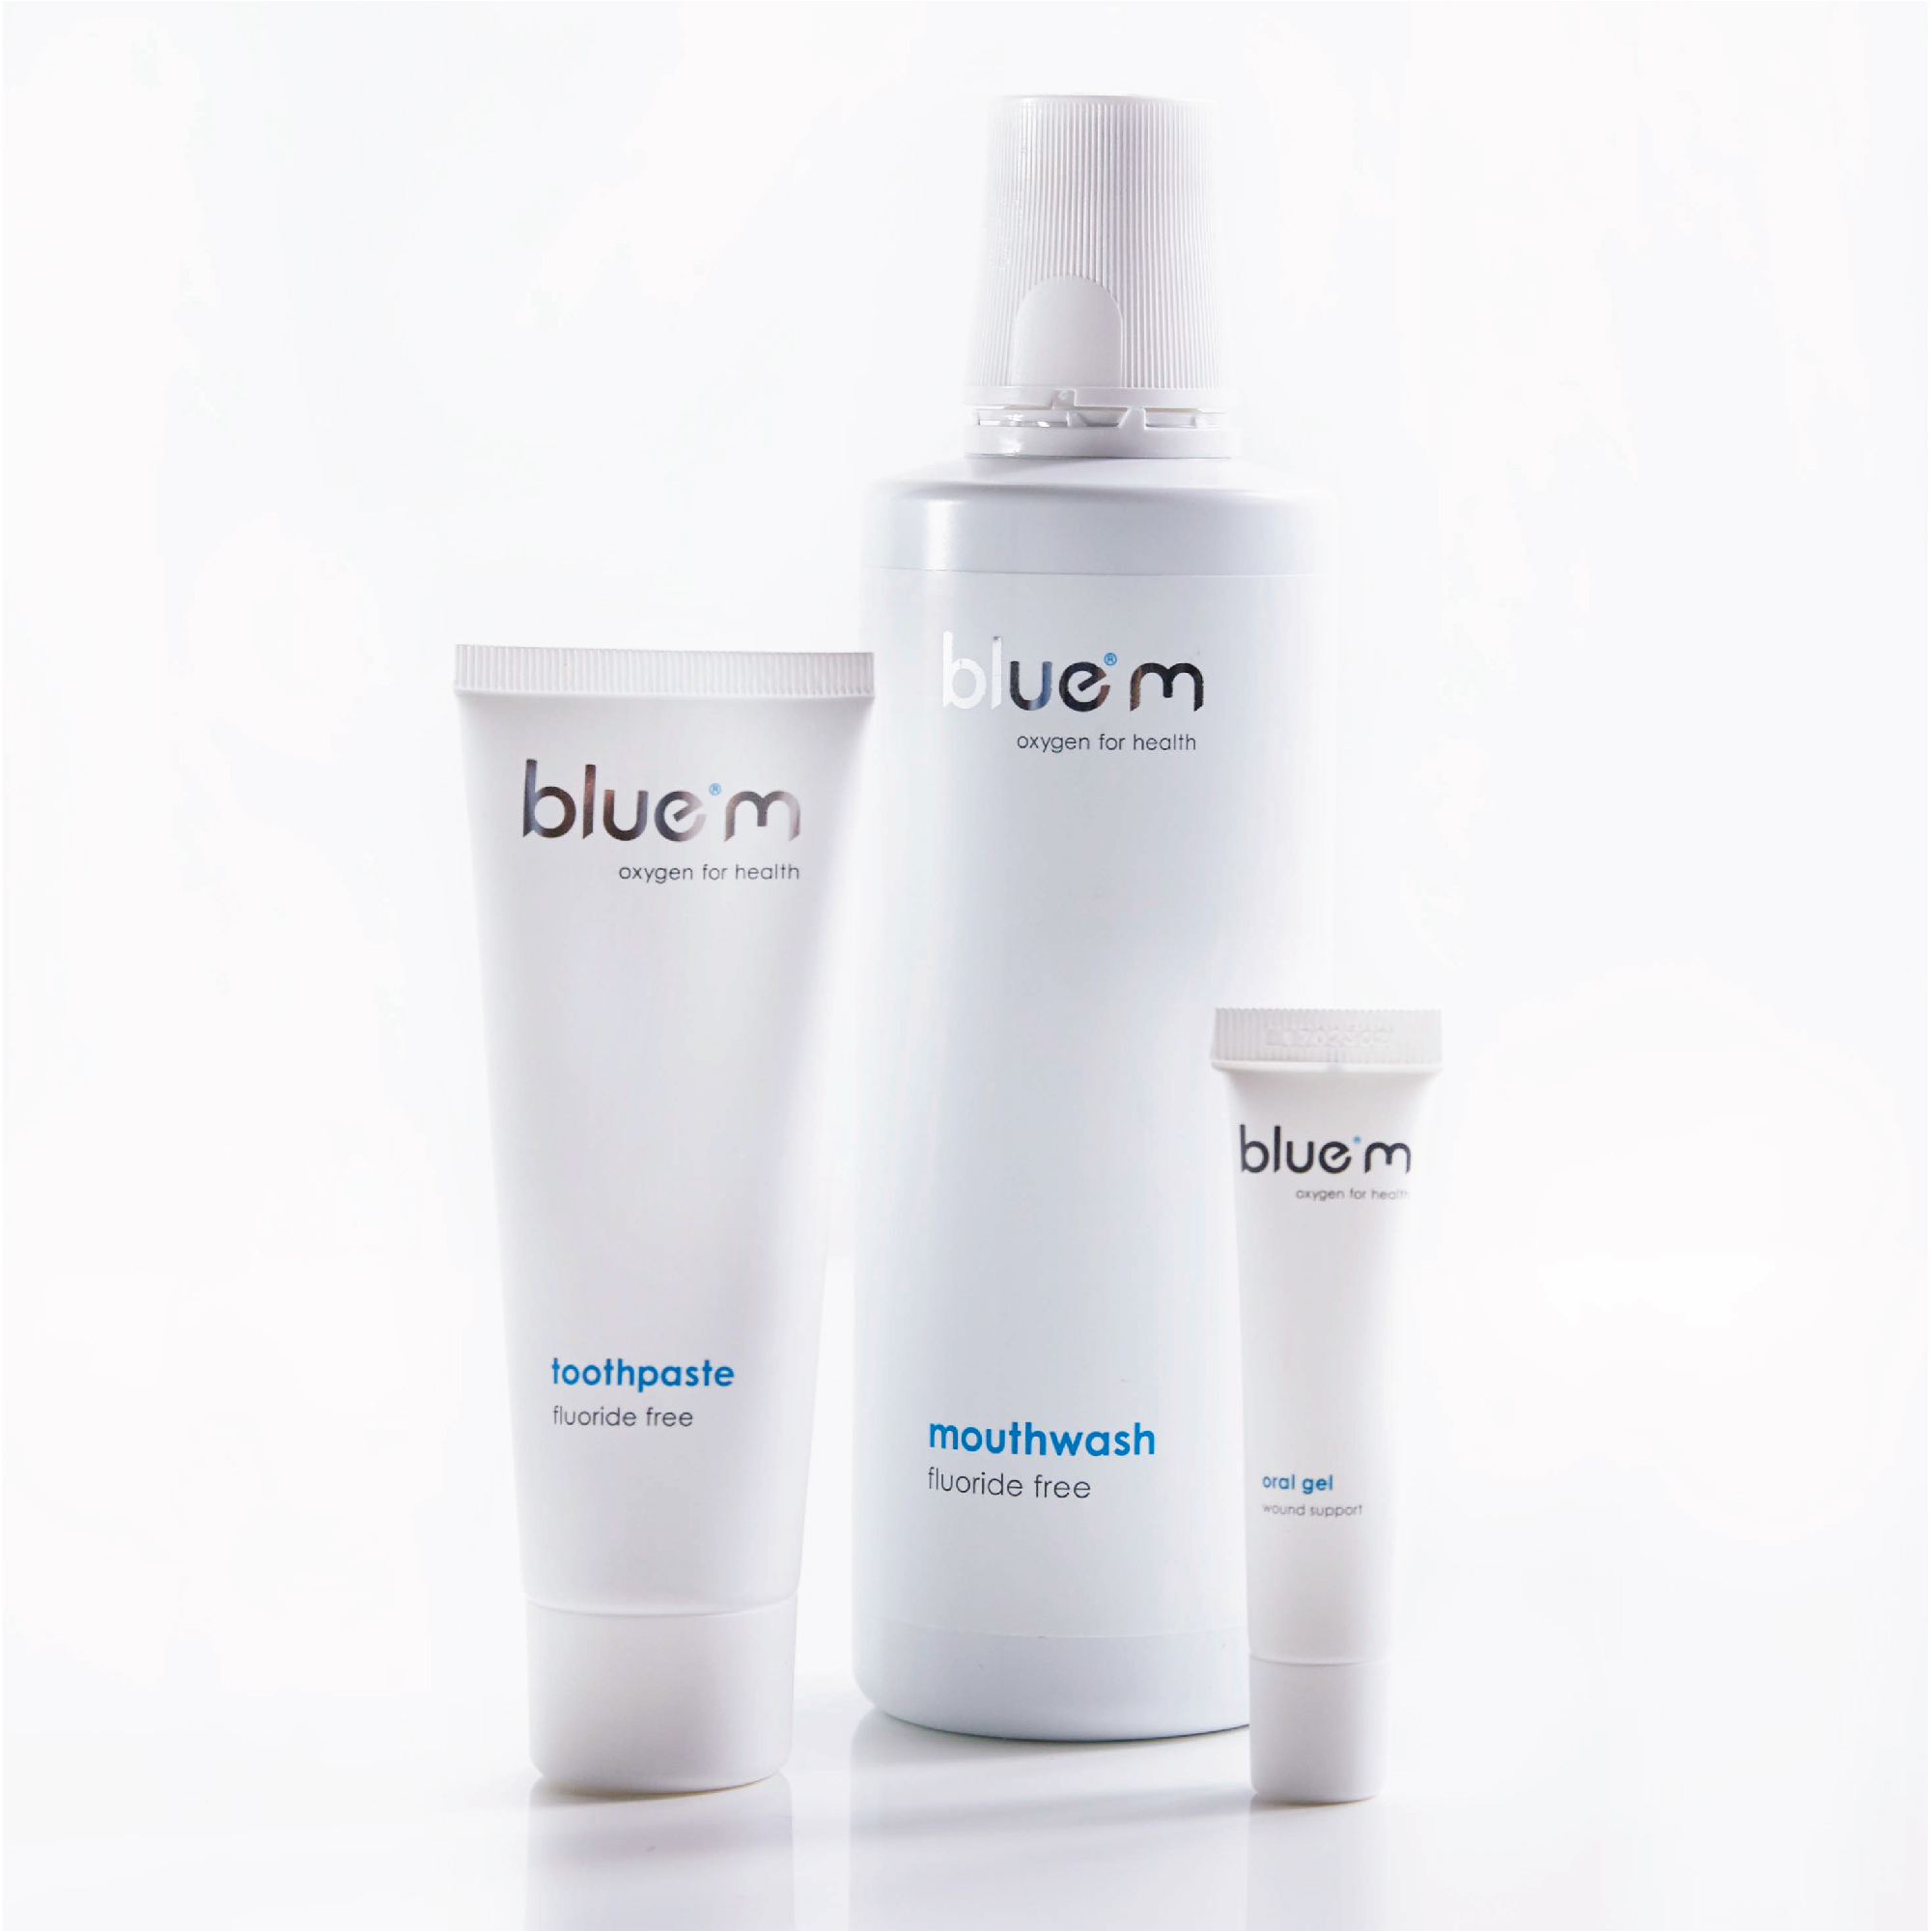 BlueM Products